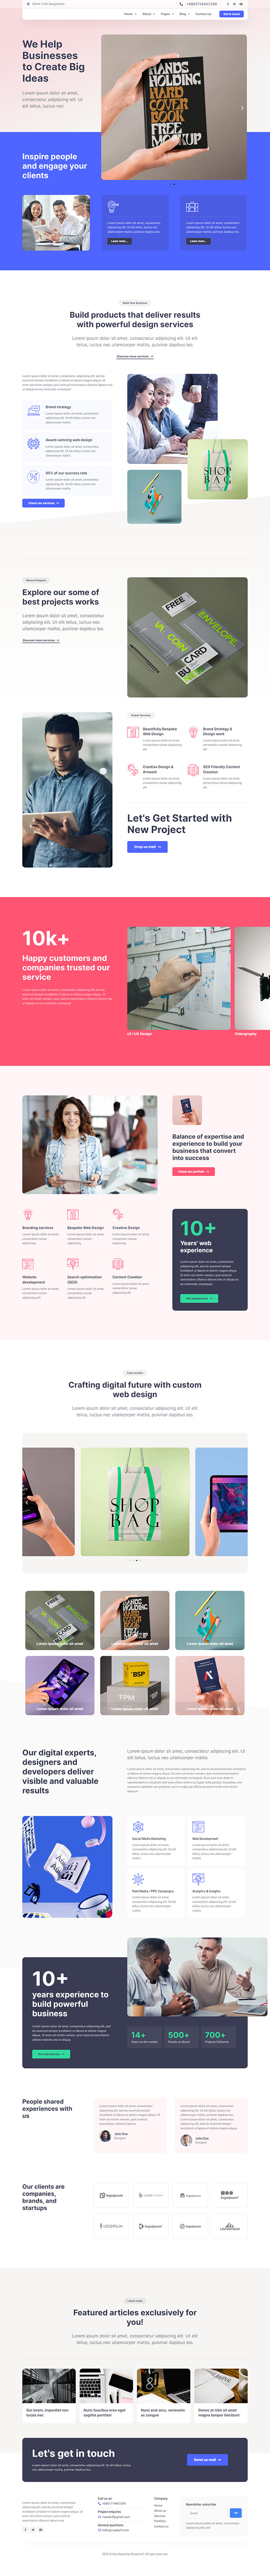 Creative Agency WordPress Website | Web Design